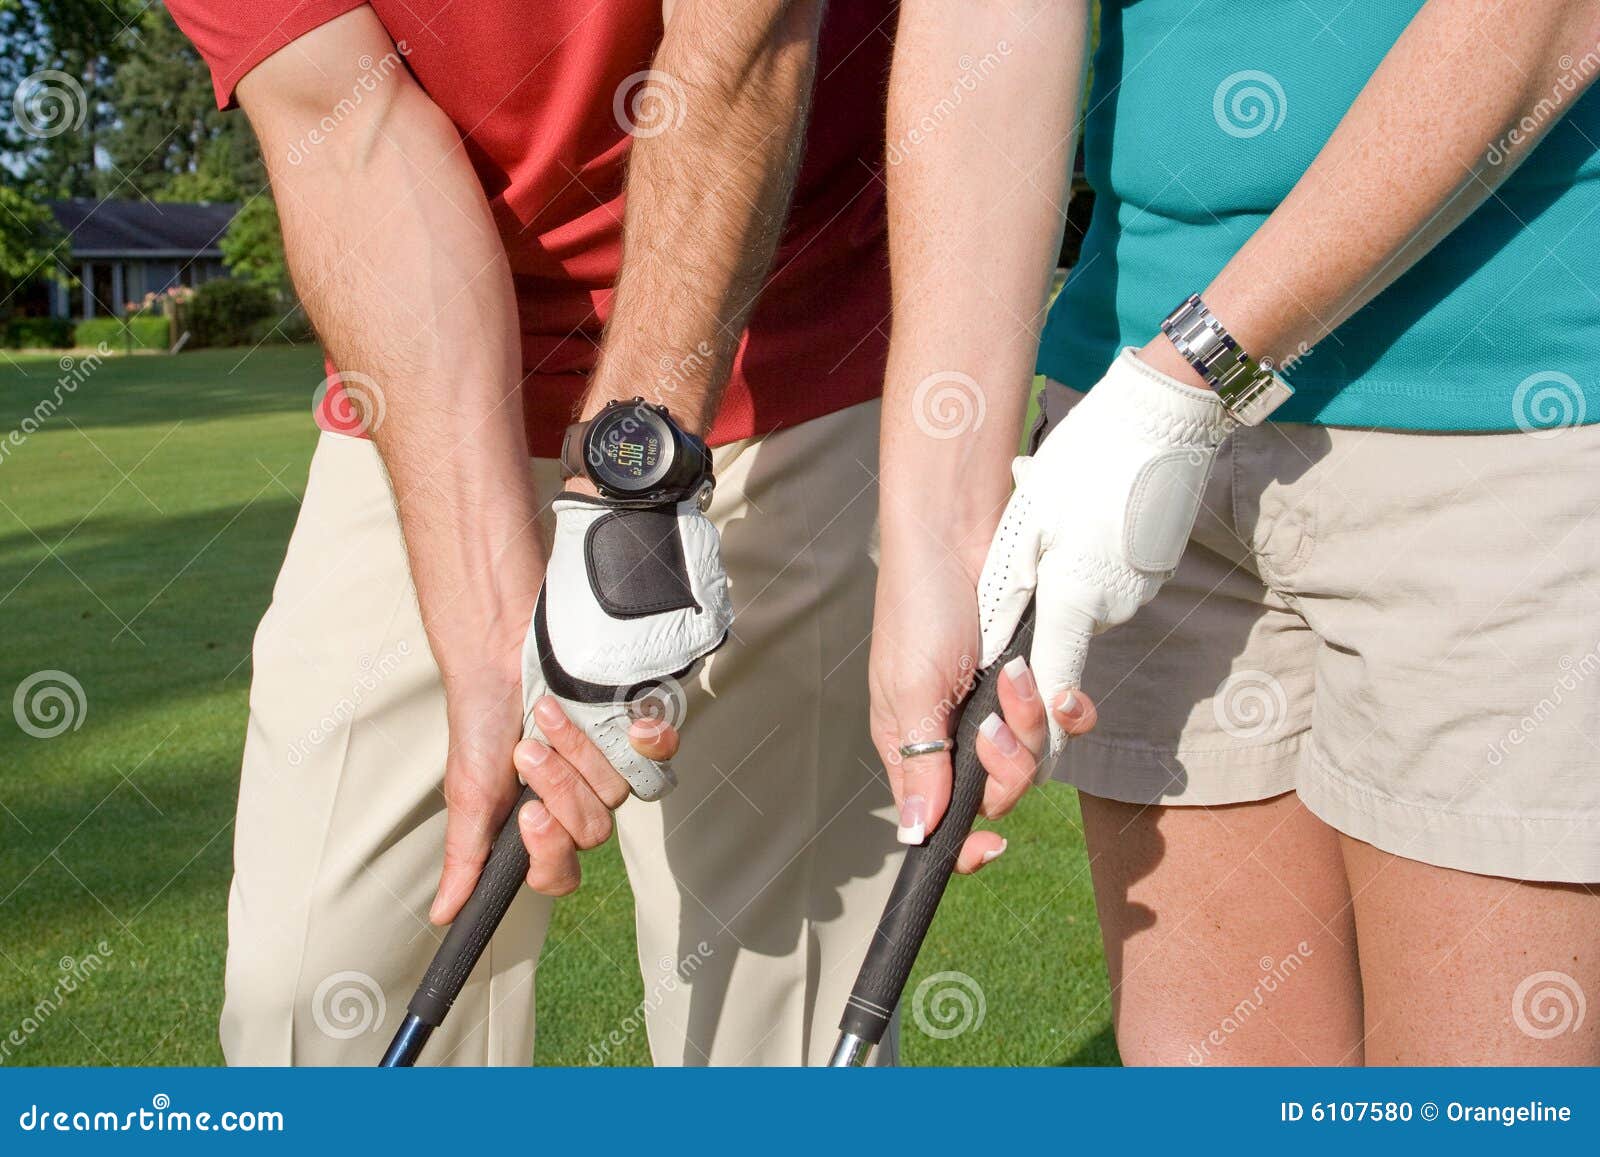 golfers practice grip - horizontal